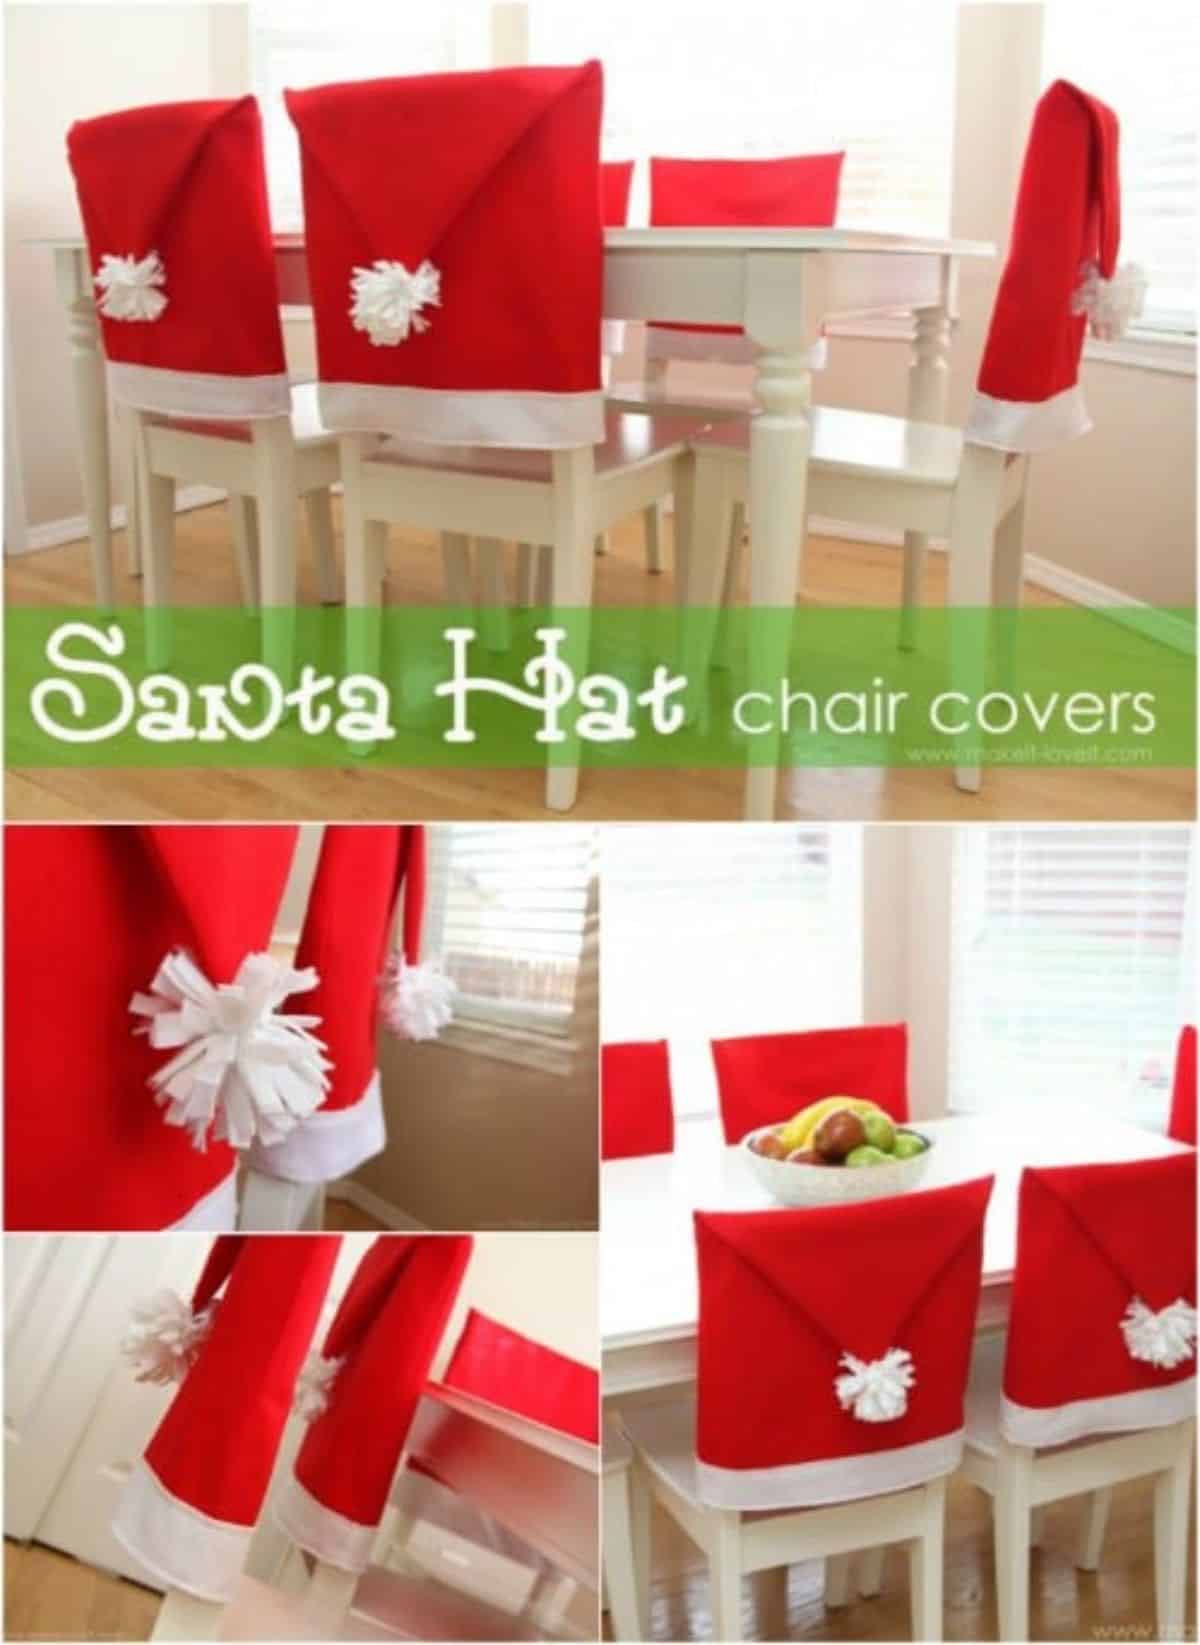 Santa Hat Chair Covers